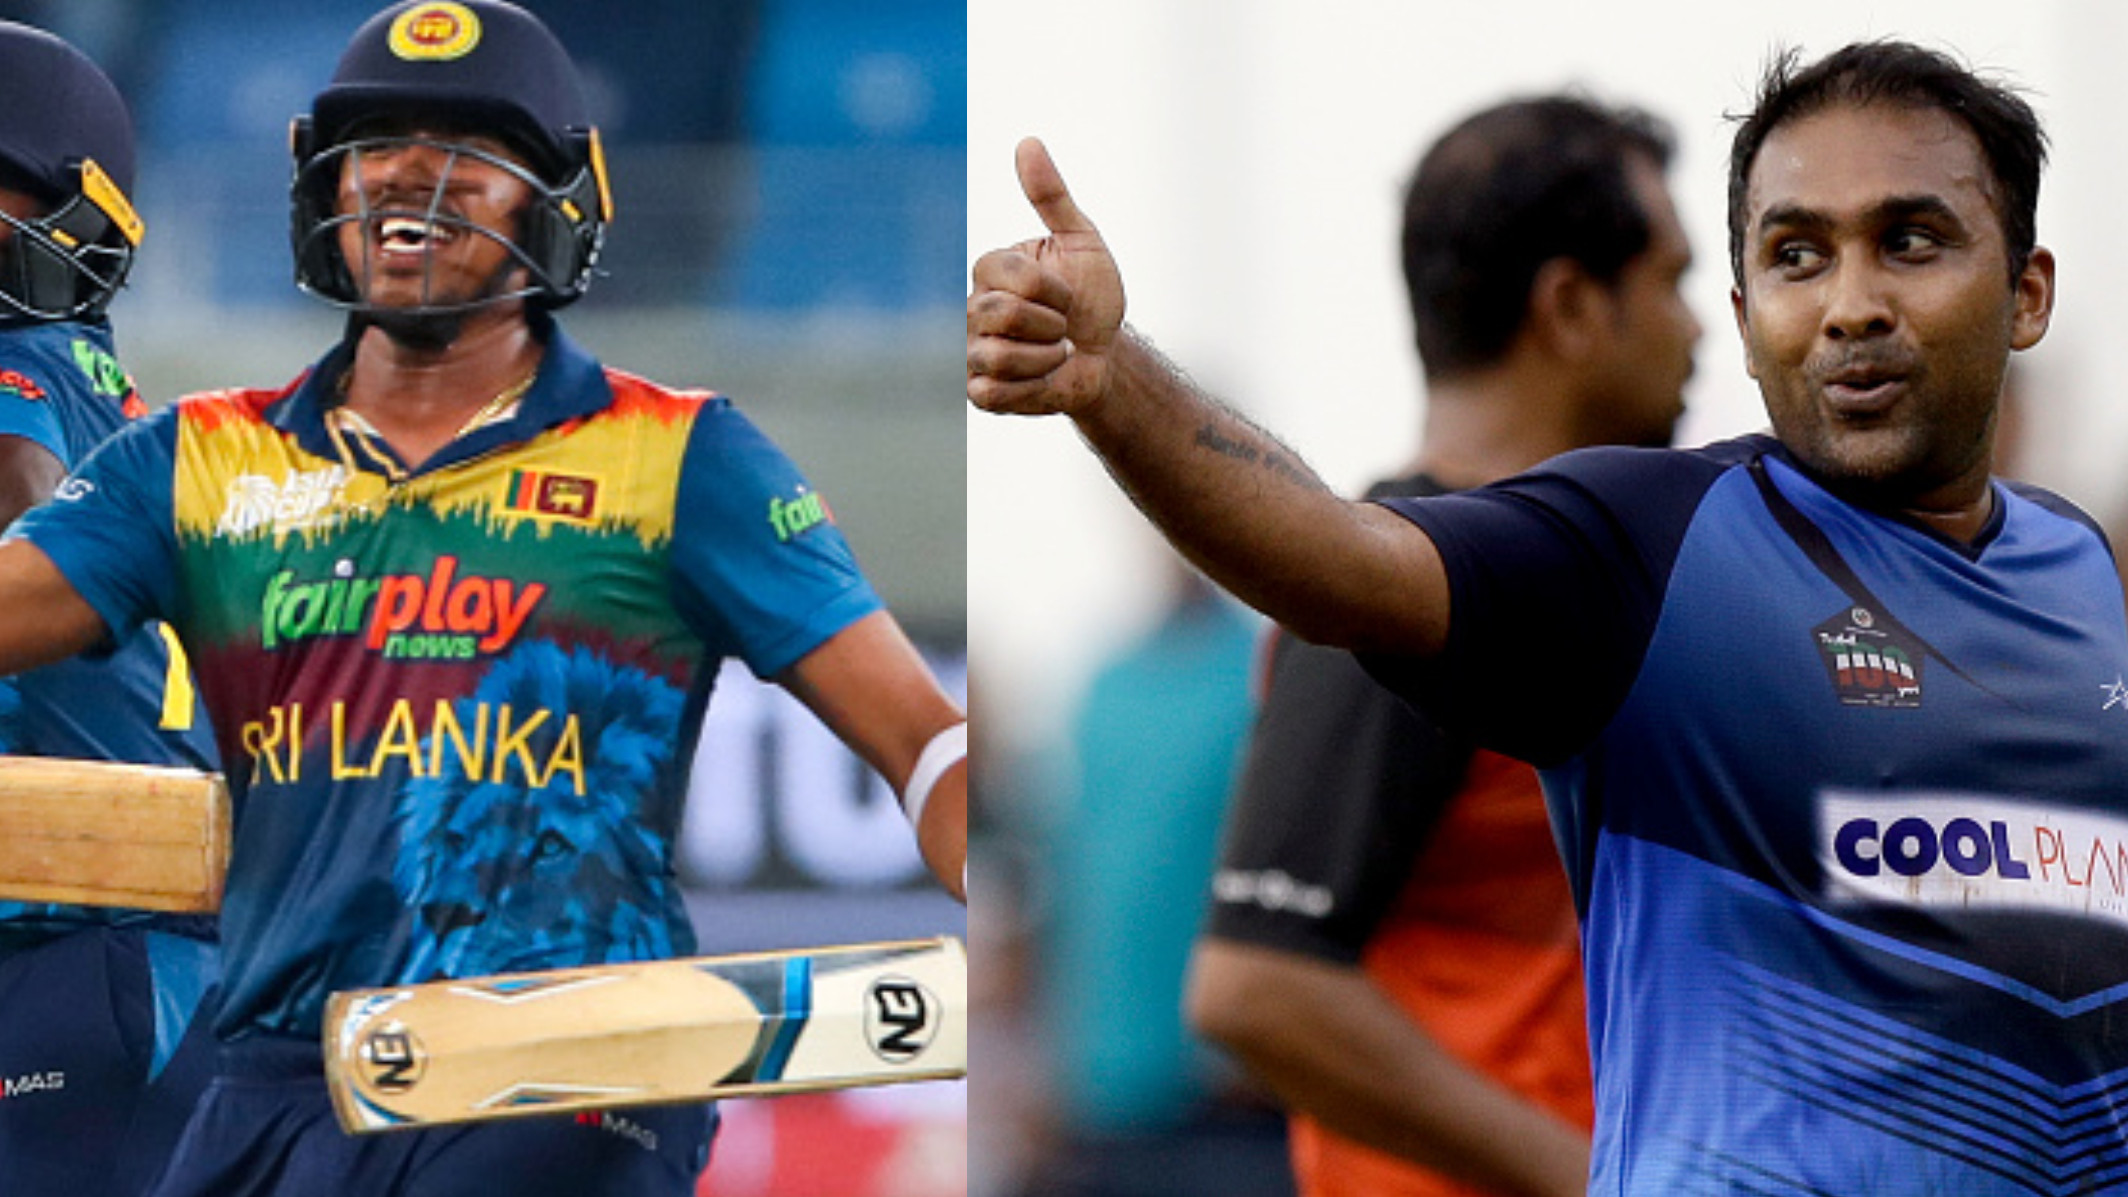 Asia Cup 2022: Mahela Jayawardena and Maheesh Theekshana fuel banter after Sri Lanka’s majestic win over Bangladesh